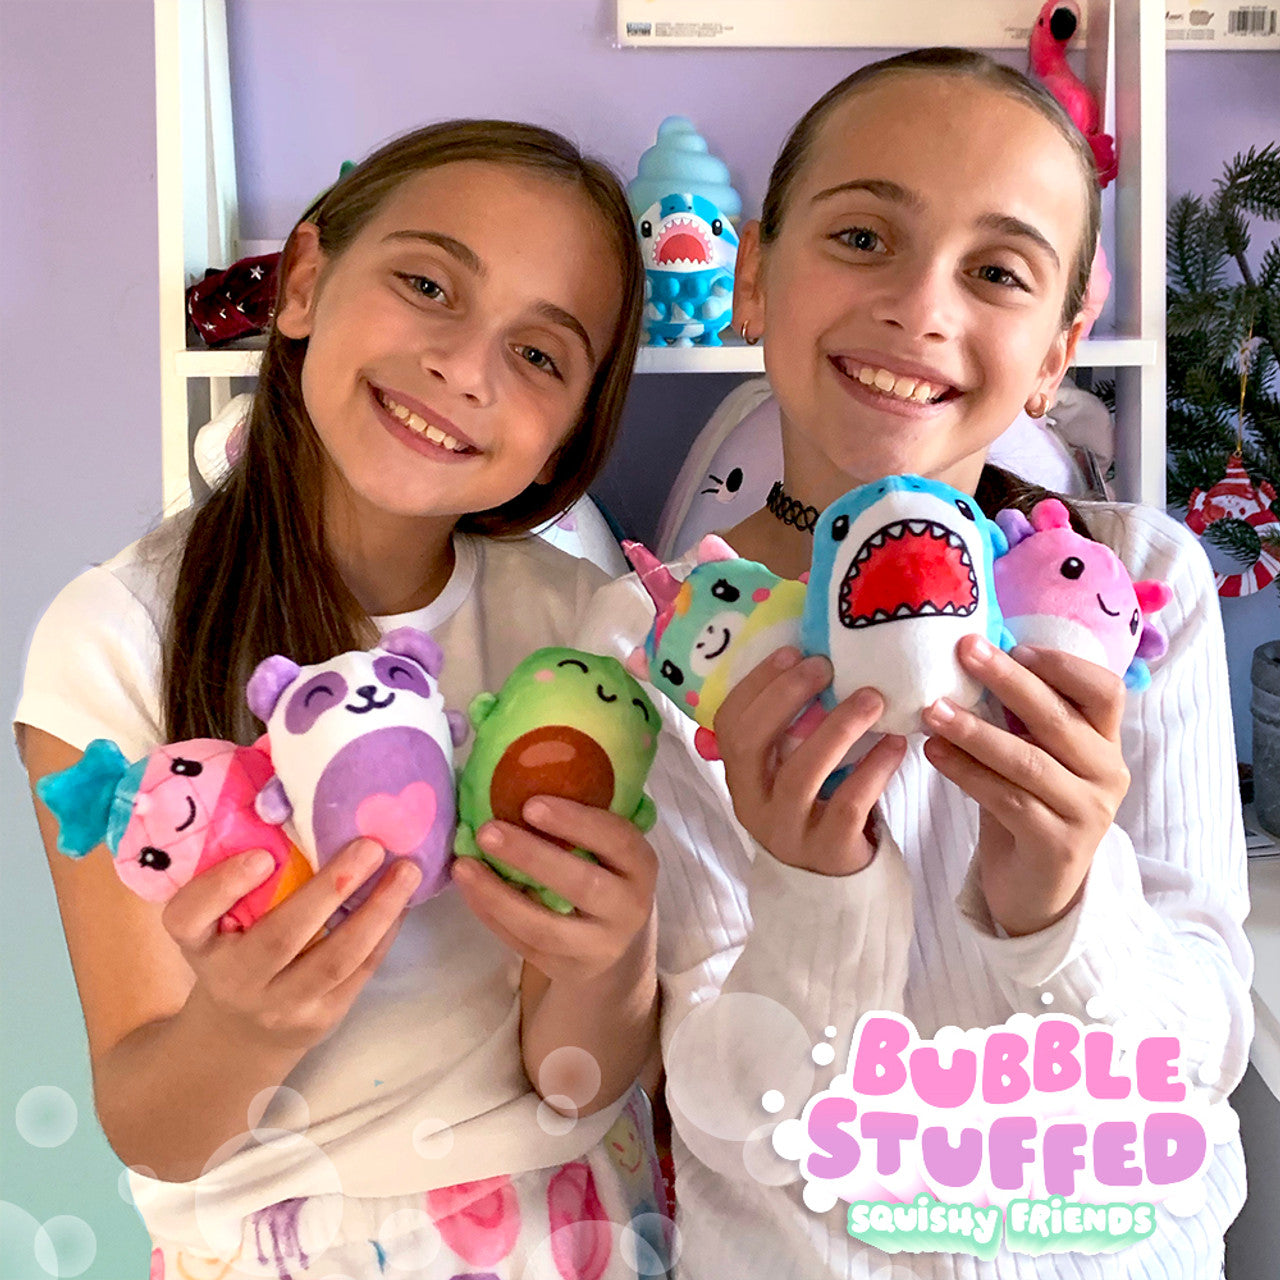 Bubble-Stuffed Squishy Friends